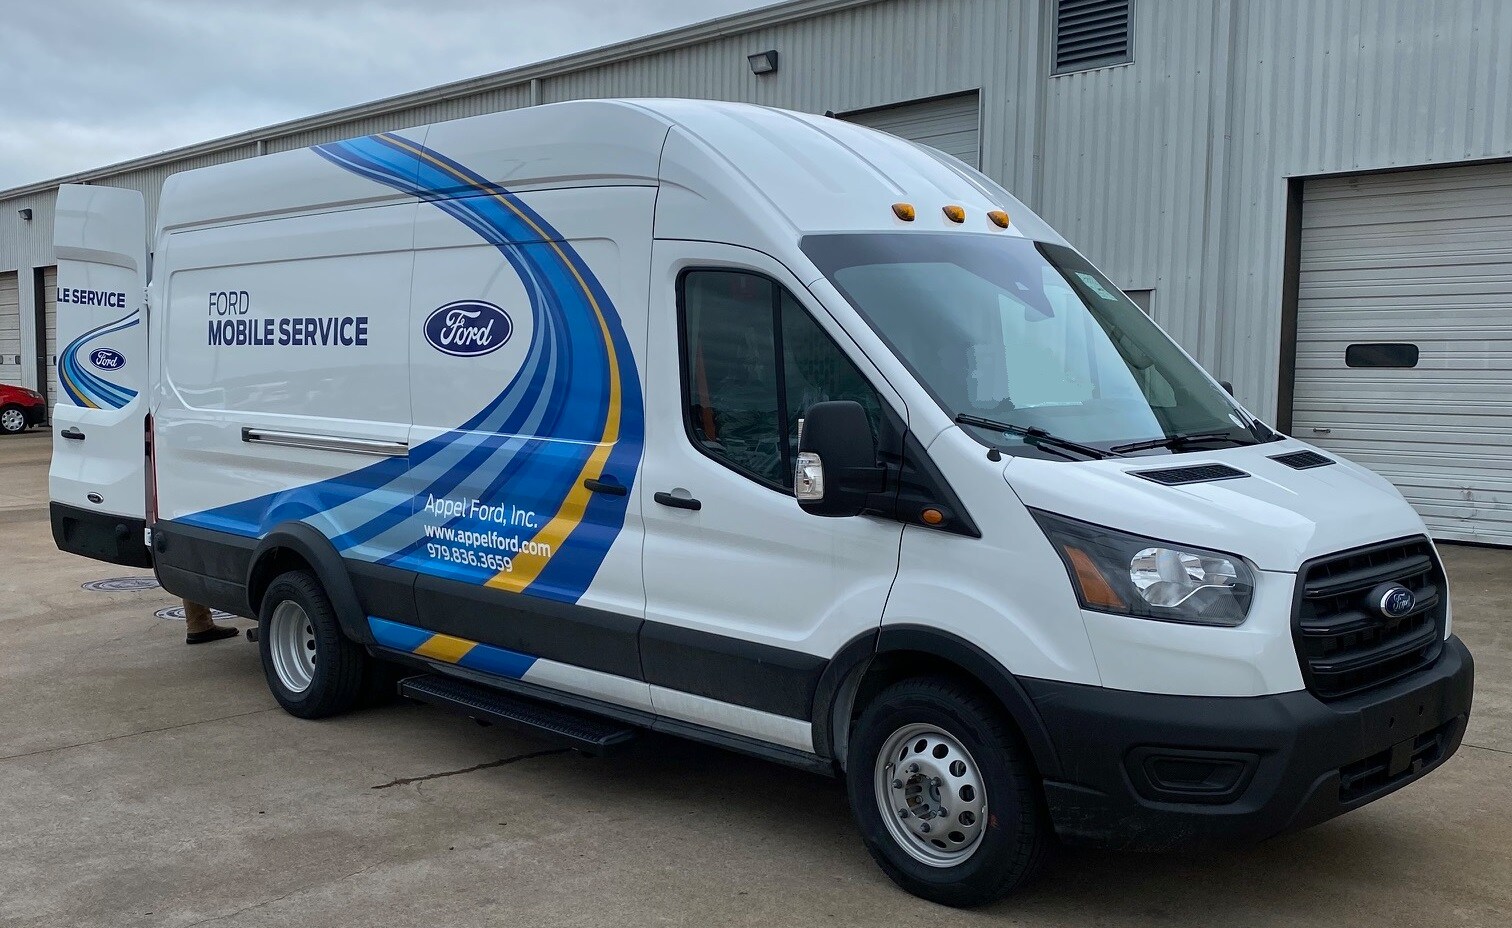 Ford Mobile Service in Brenham, Texas